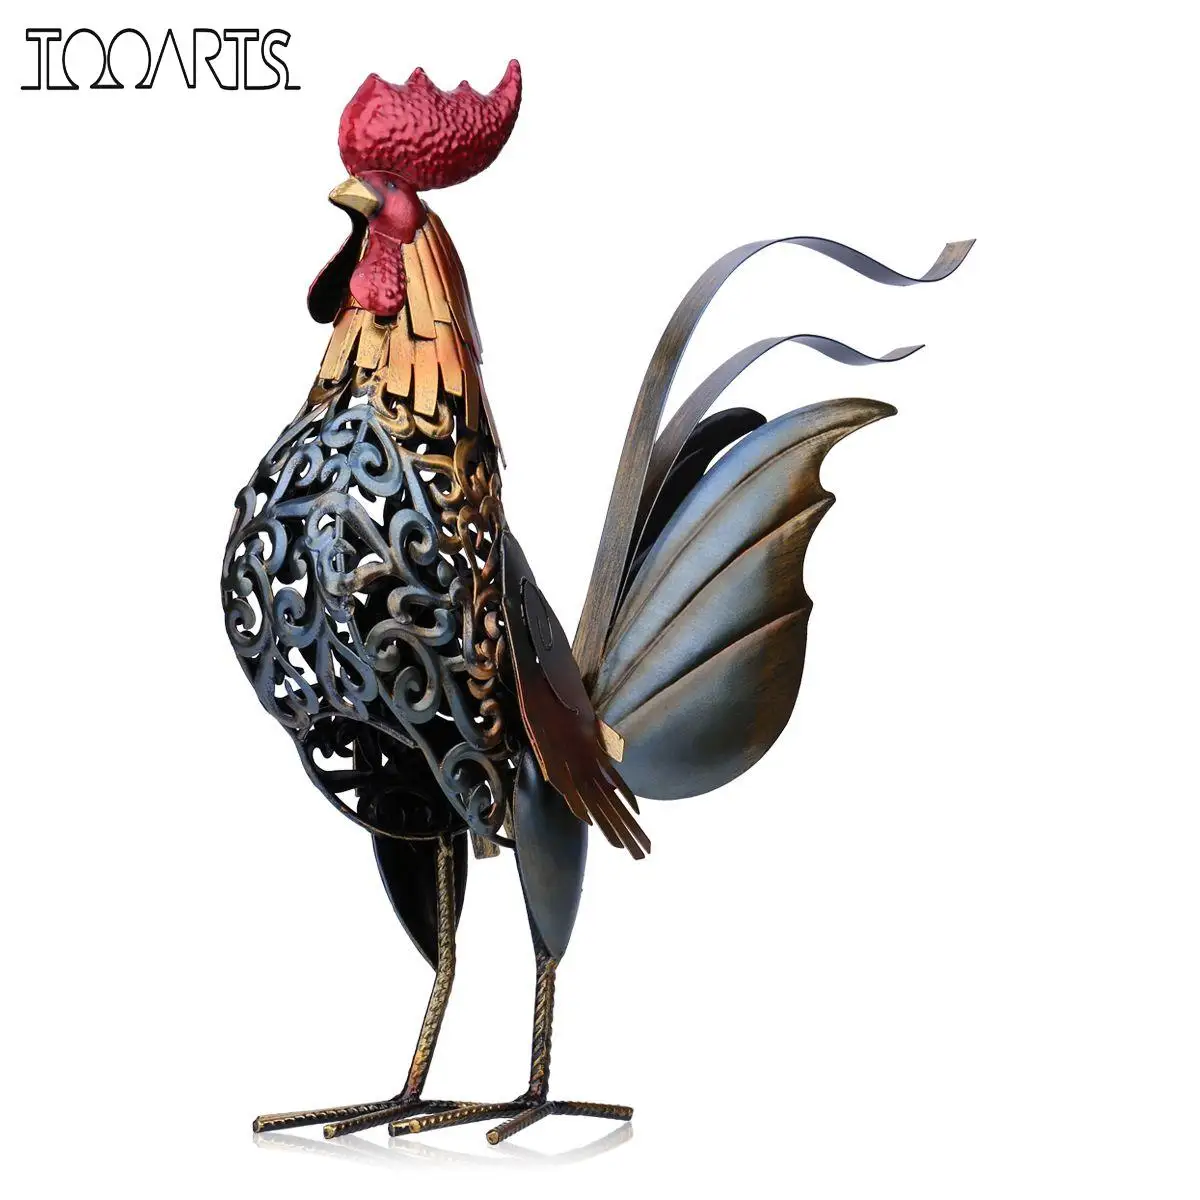 Tooarts Metal Chicken Rooster Ornaments Home Decor Iron Craft Gift Handicraft Animal Figurine